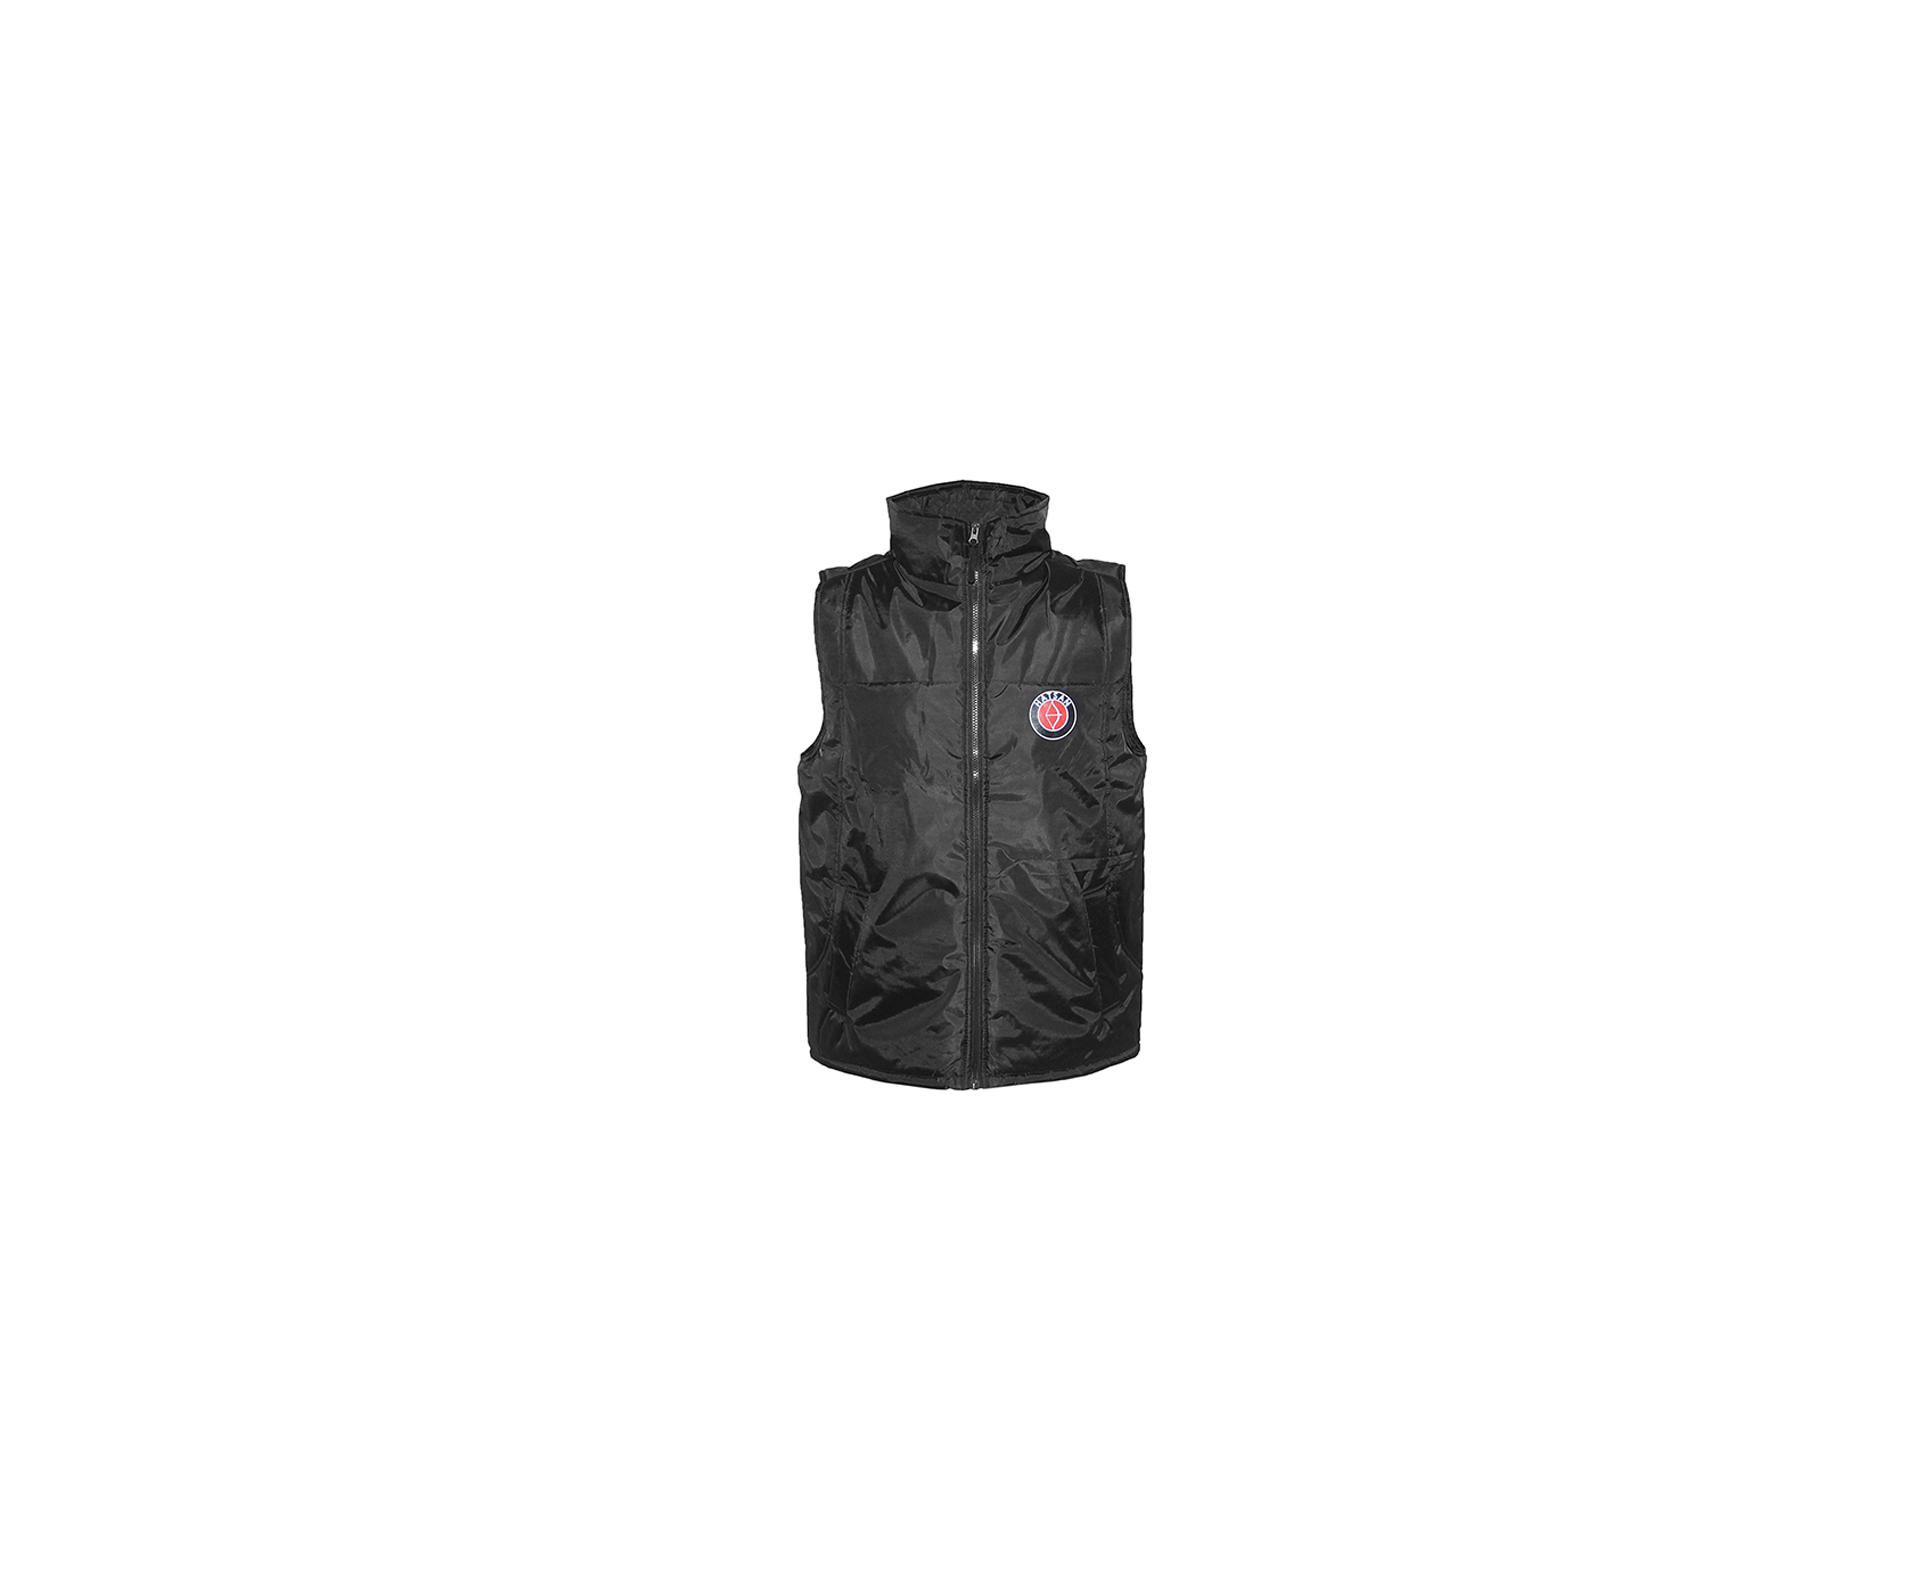 Carabina De Pressão Hatsan Ht 125 Com Gas Ram 75kg Vortex 5,5 Mm + Case Rigido + Colete Hatsan - Hatsan